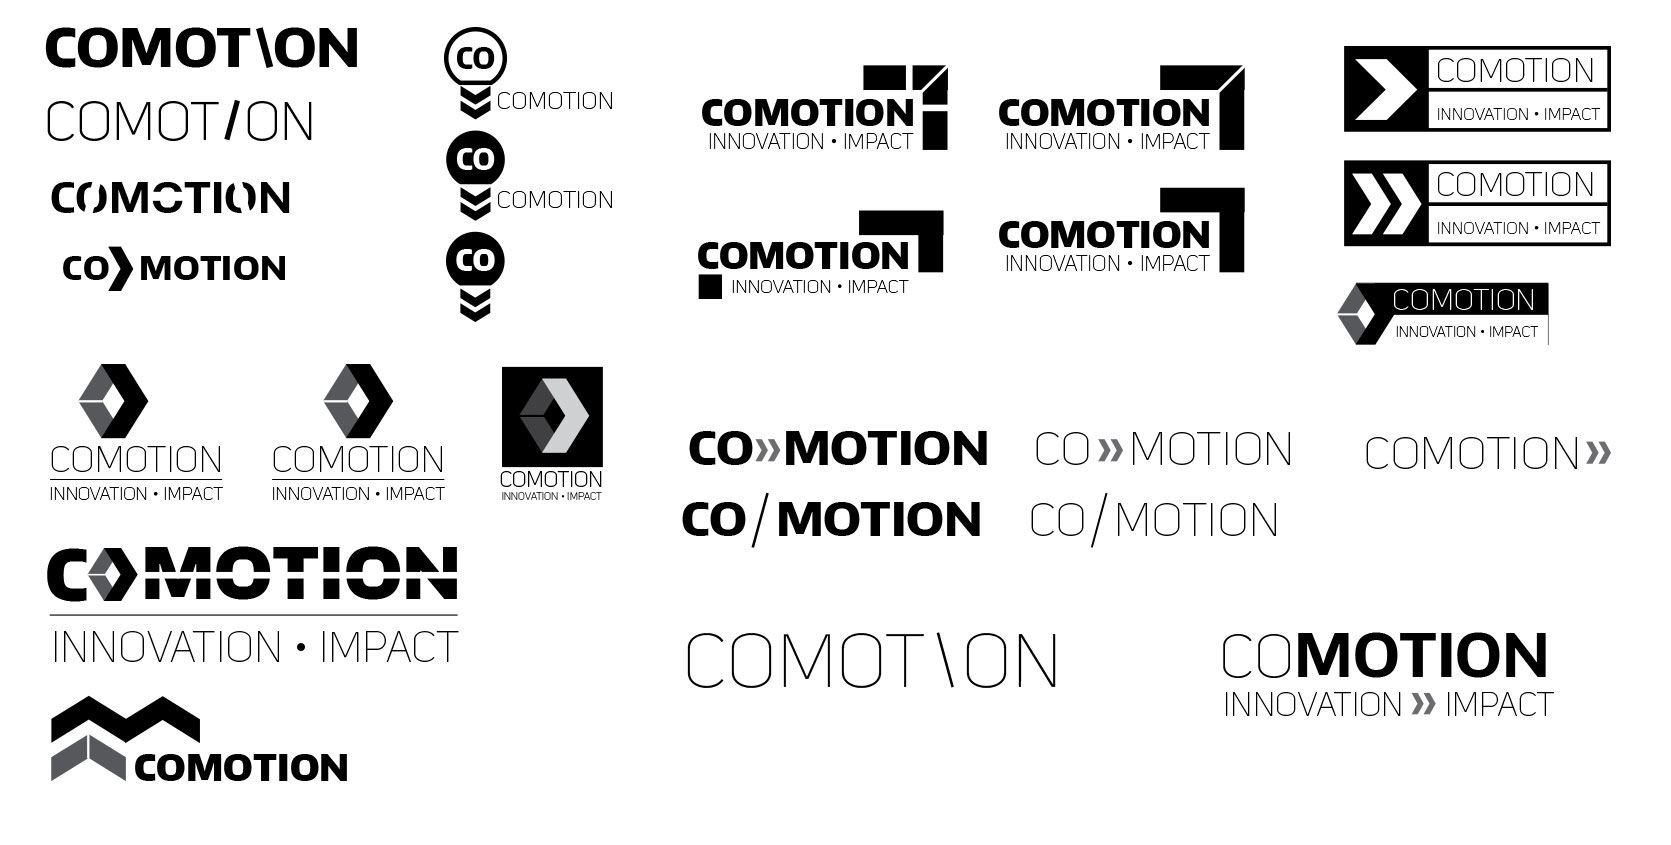 university of washington comotion logo concept sheet